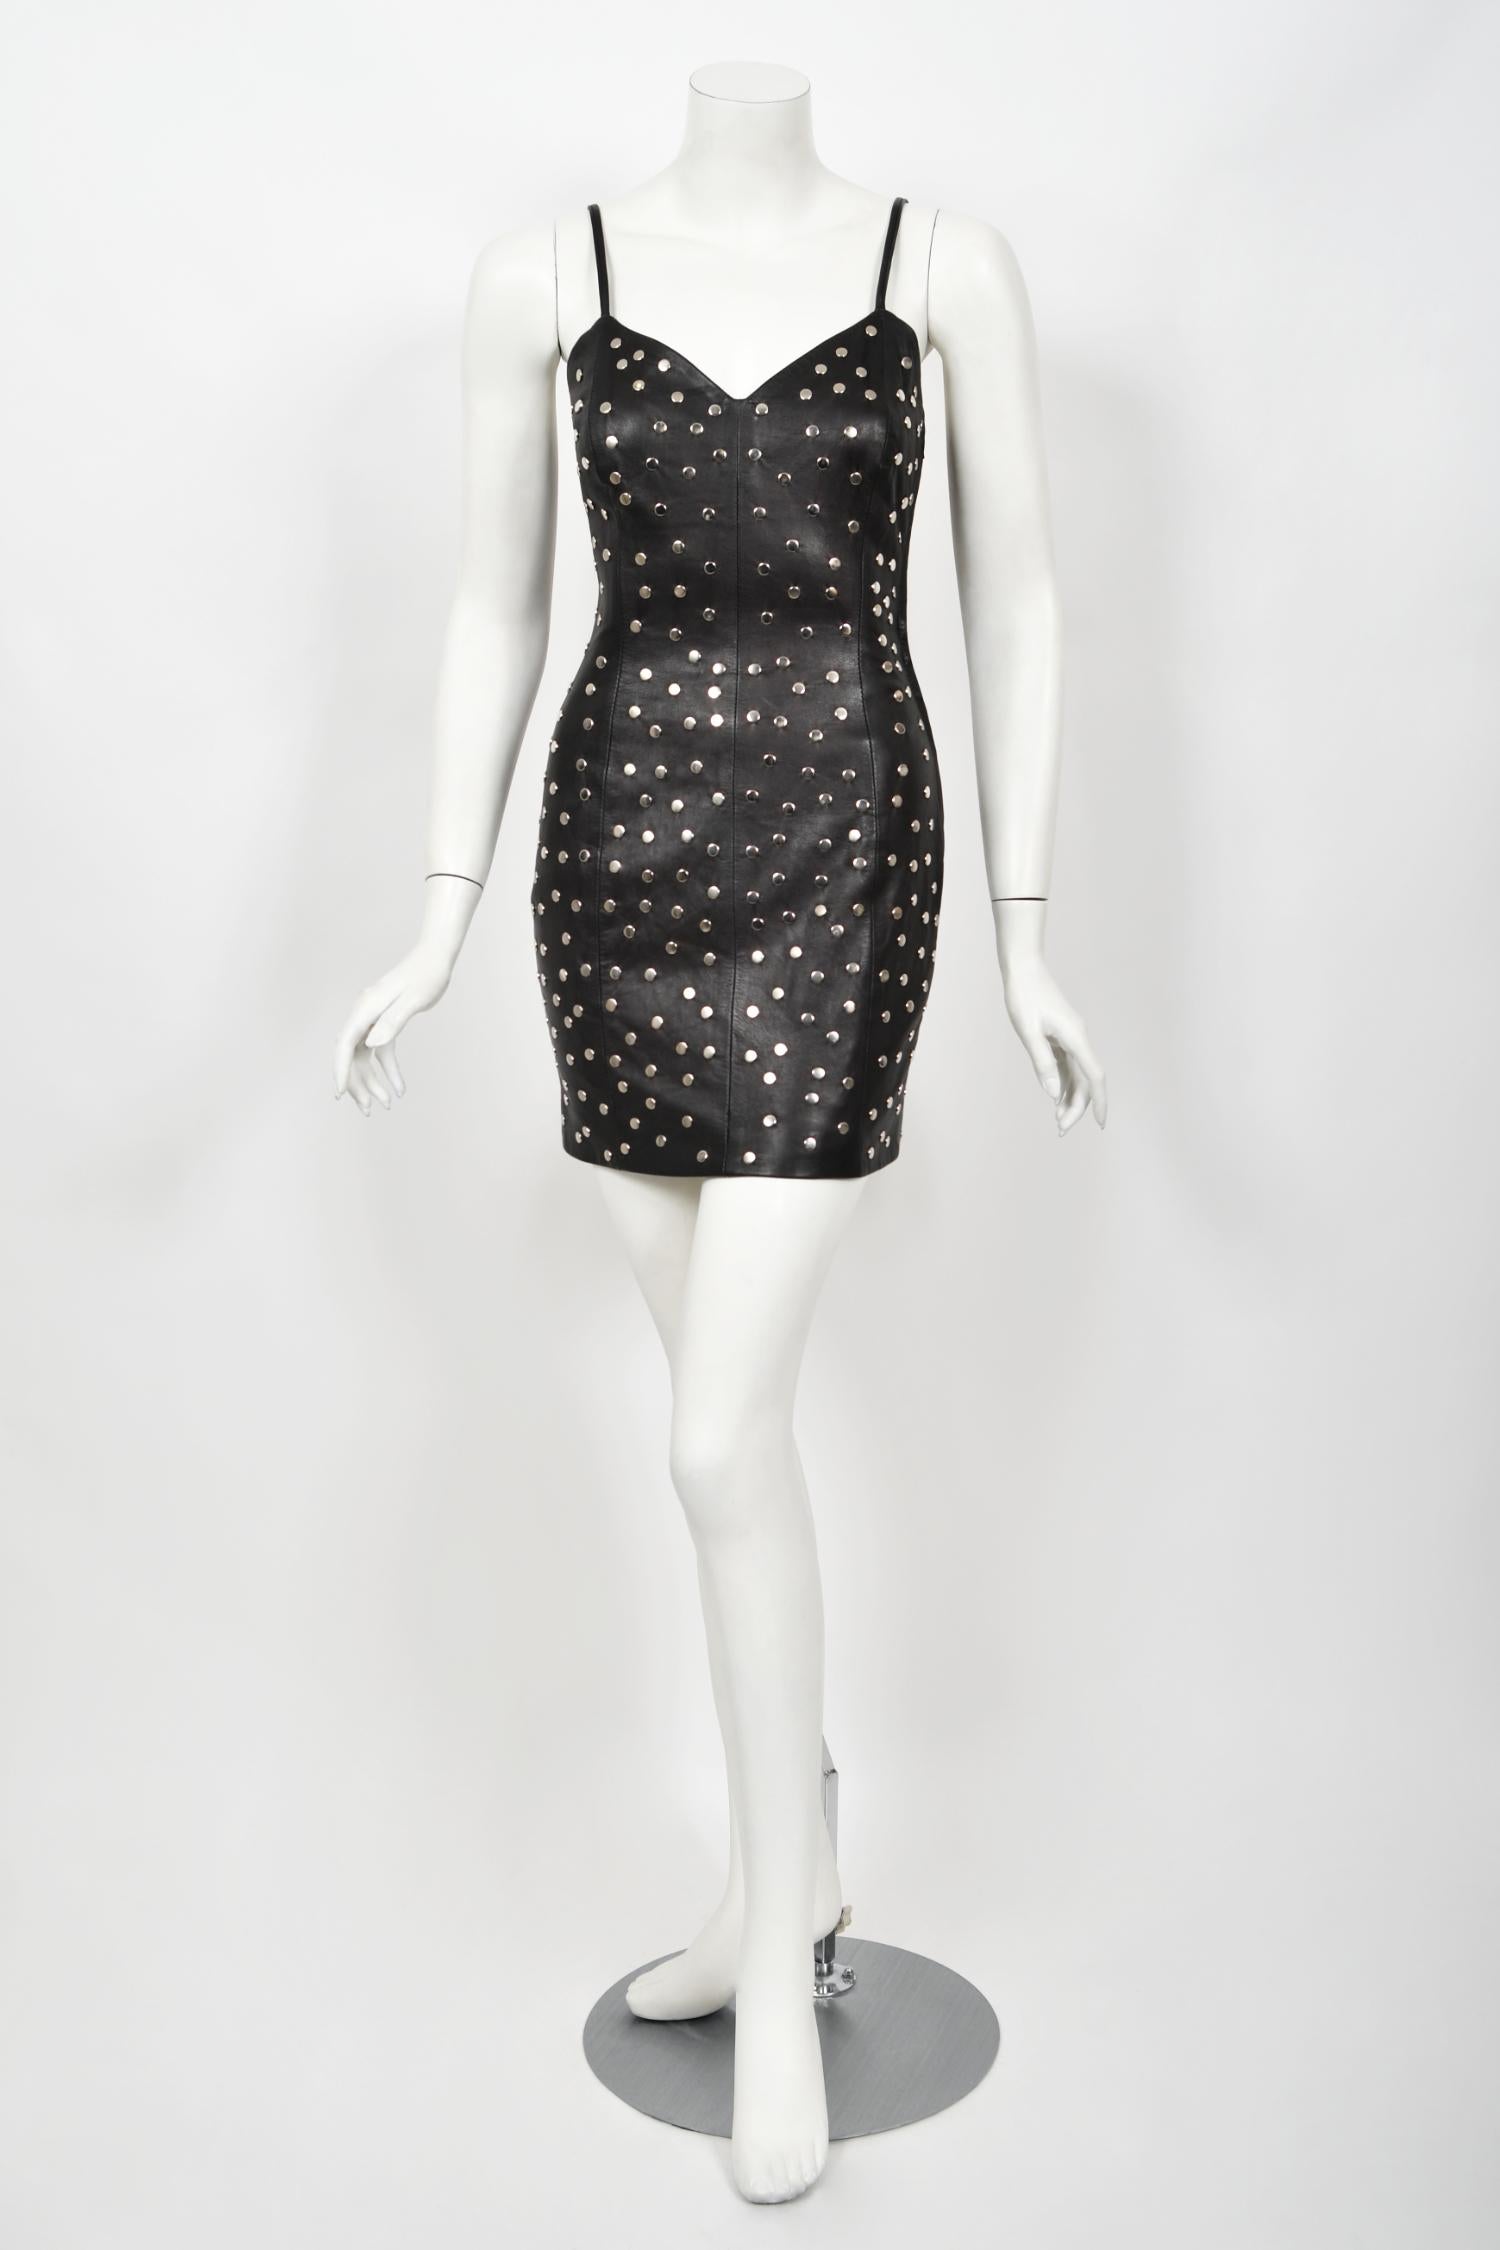 Women's Vintage 1991 Dolce & Gabbana Documented Runway Studded Black Leather Mini Dress For Sale